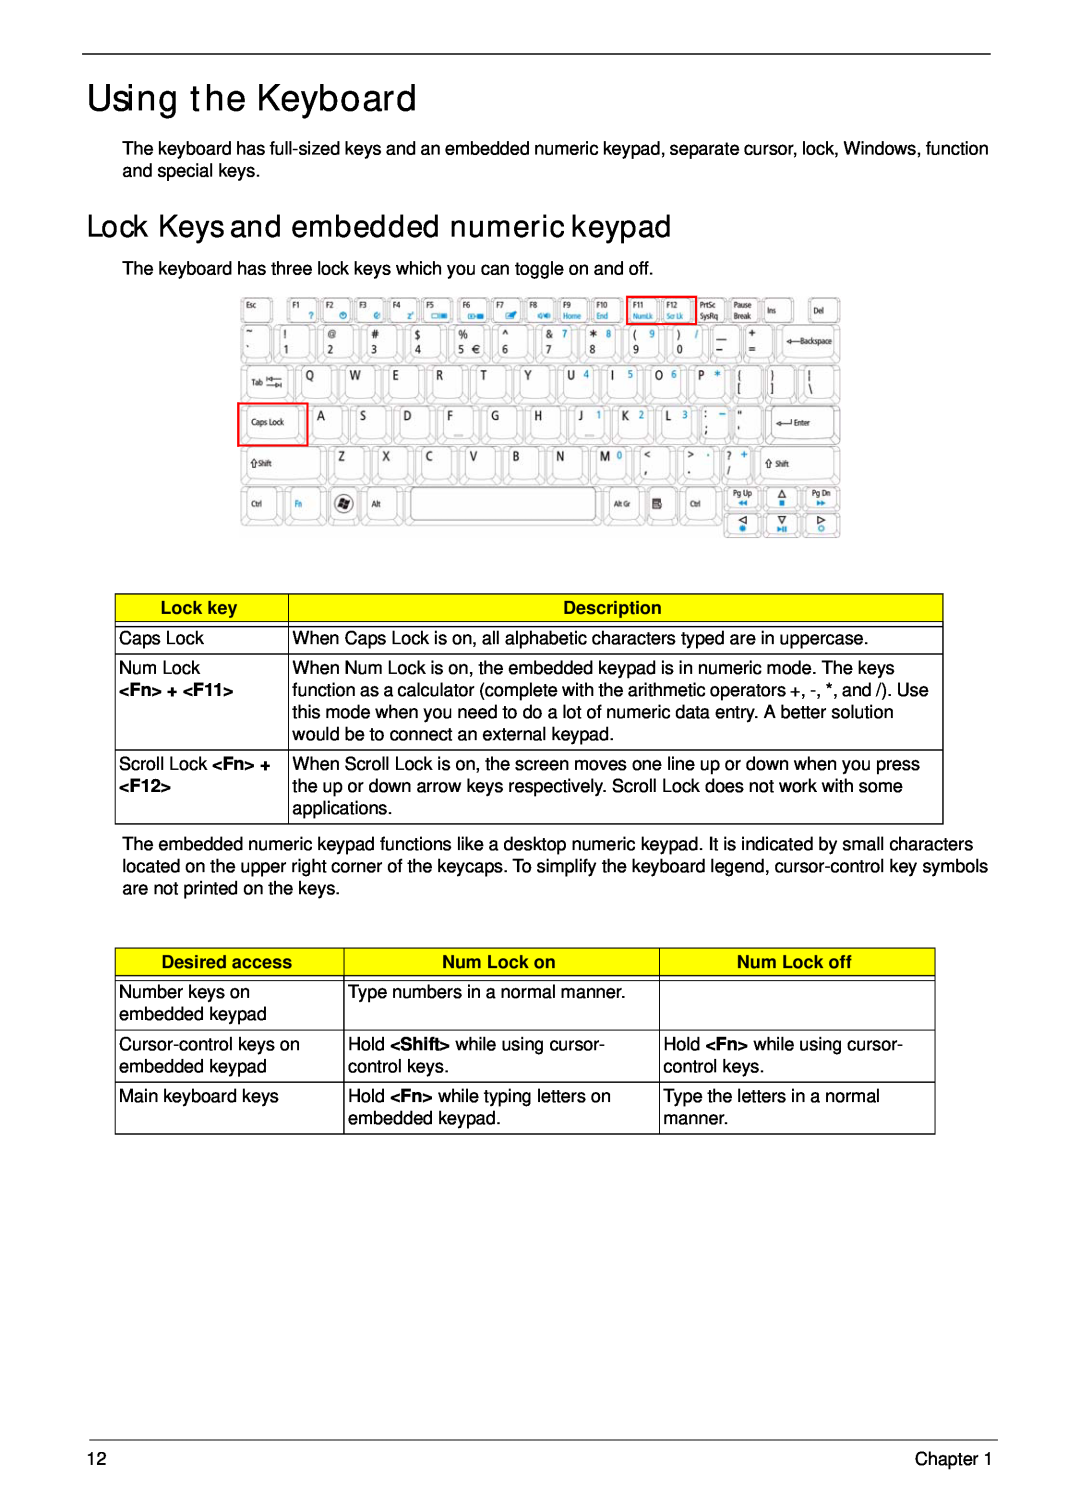 Acer 5532 manual Using the Keyboard, Lock Keys and embedded numeric keypad, Lock key, Description, Fn + F11, Desired access 